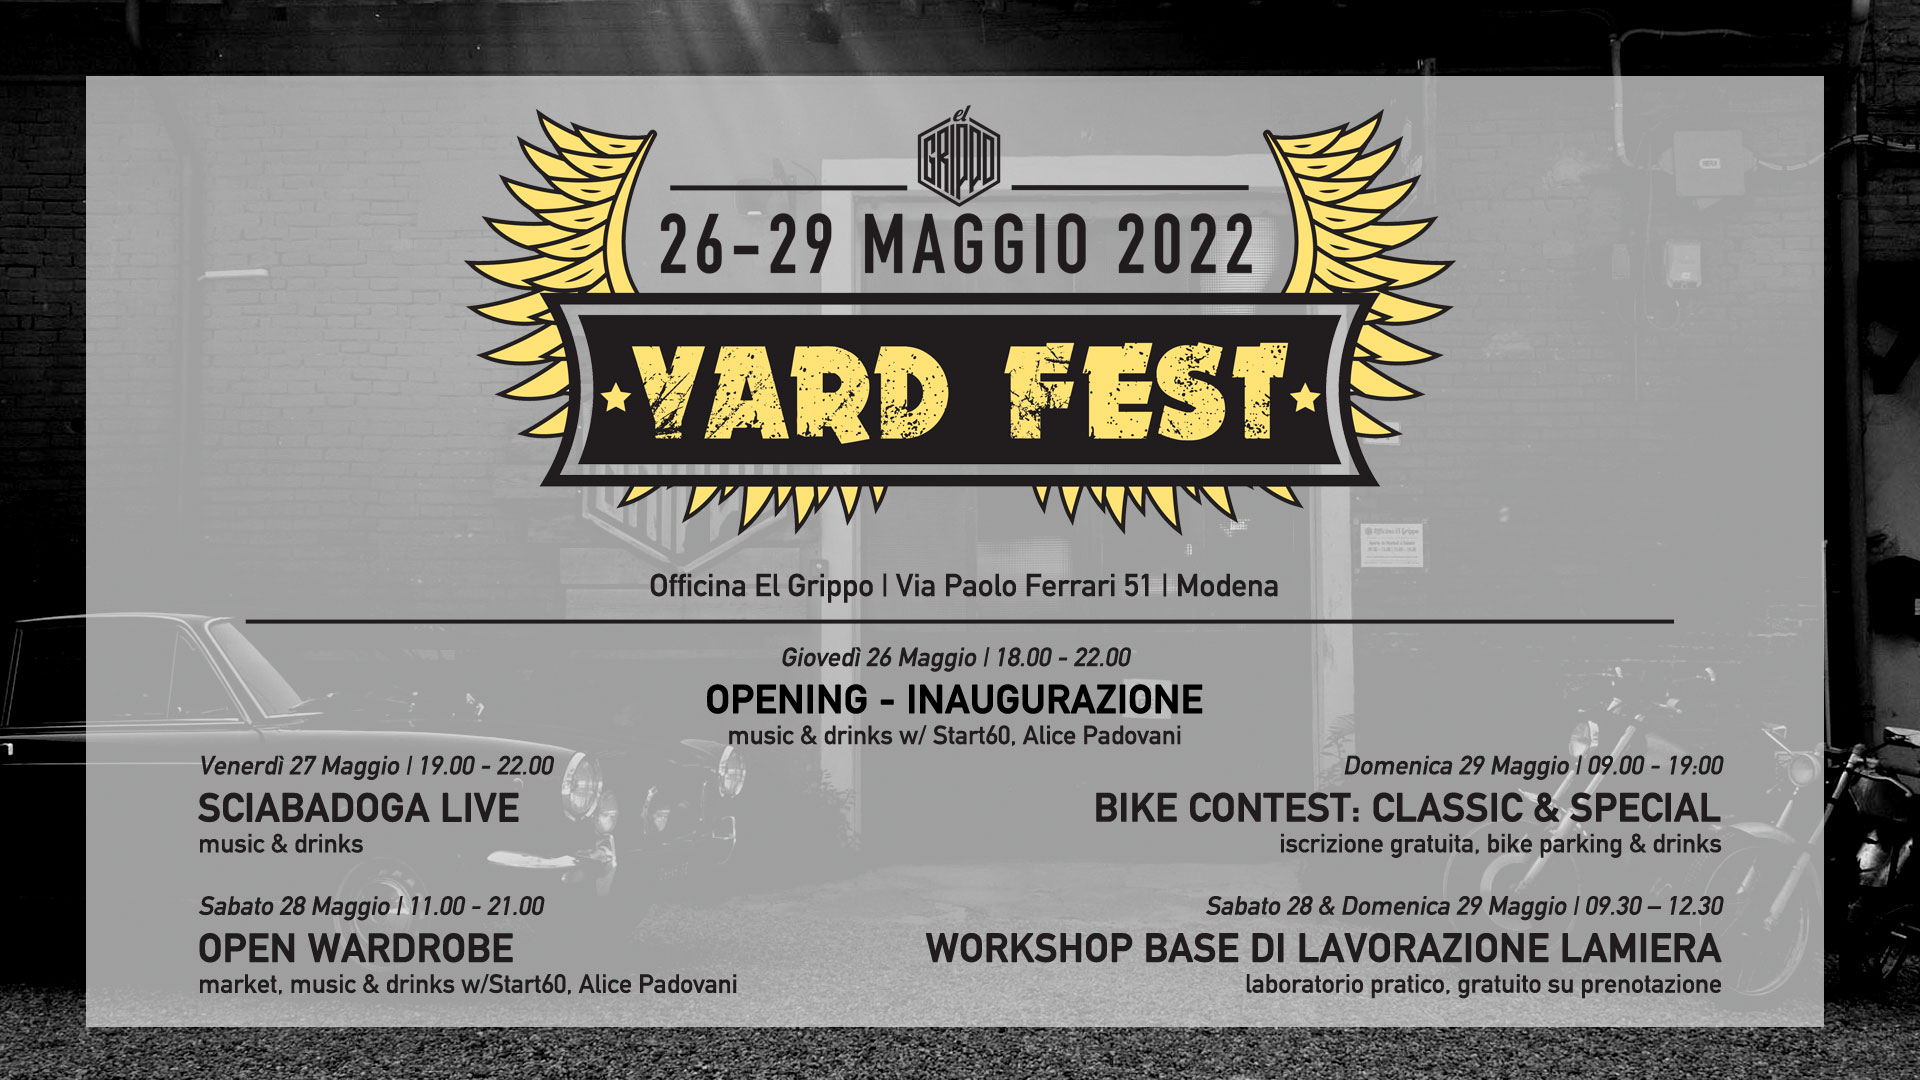 Officina El Grippo - Yard Fest 2022 - Programma